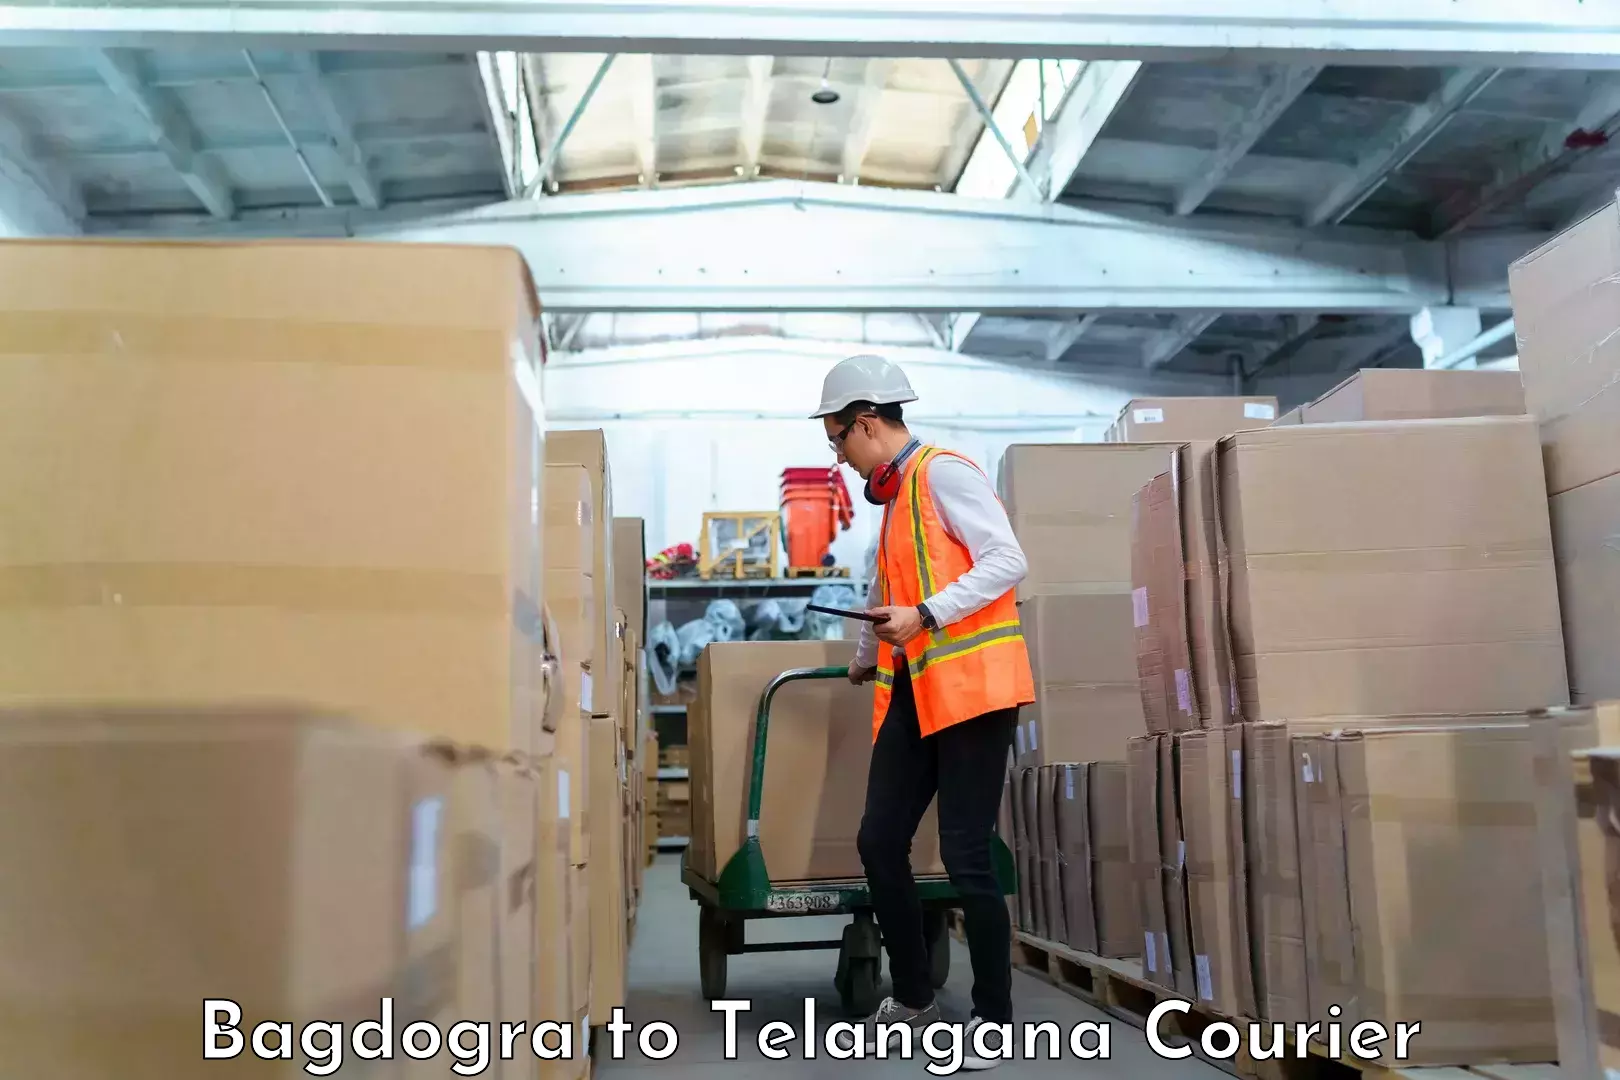 Baggage delivery technology Bagdogra to Kacheguda